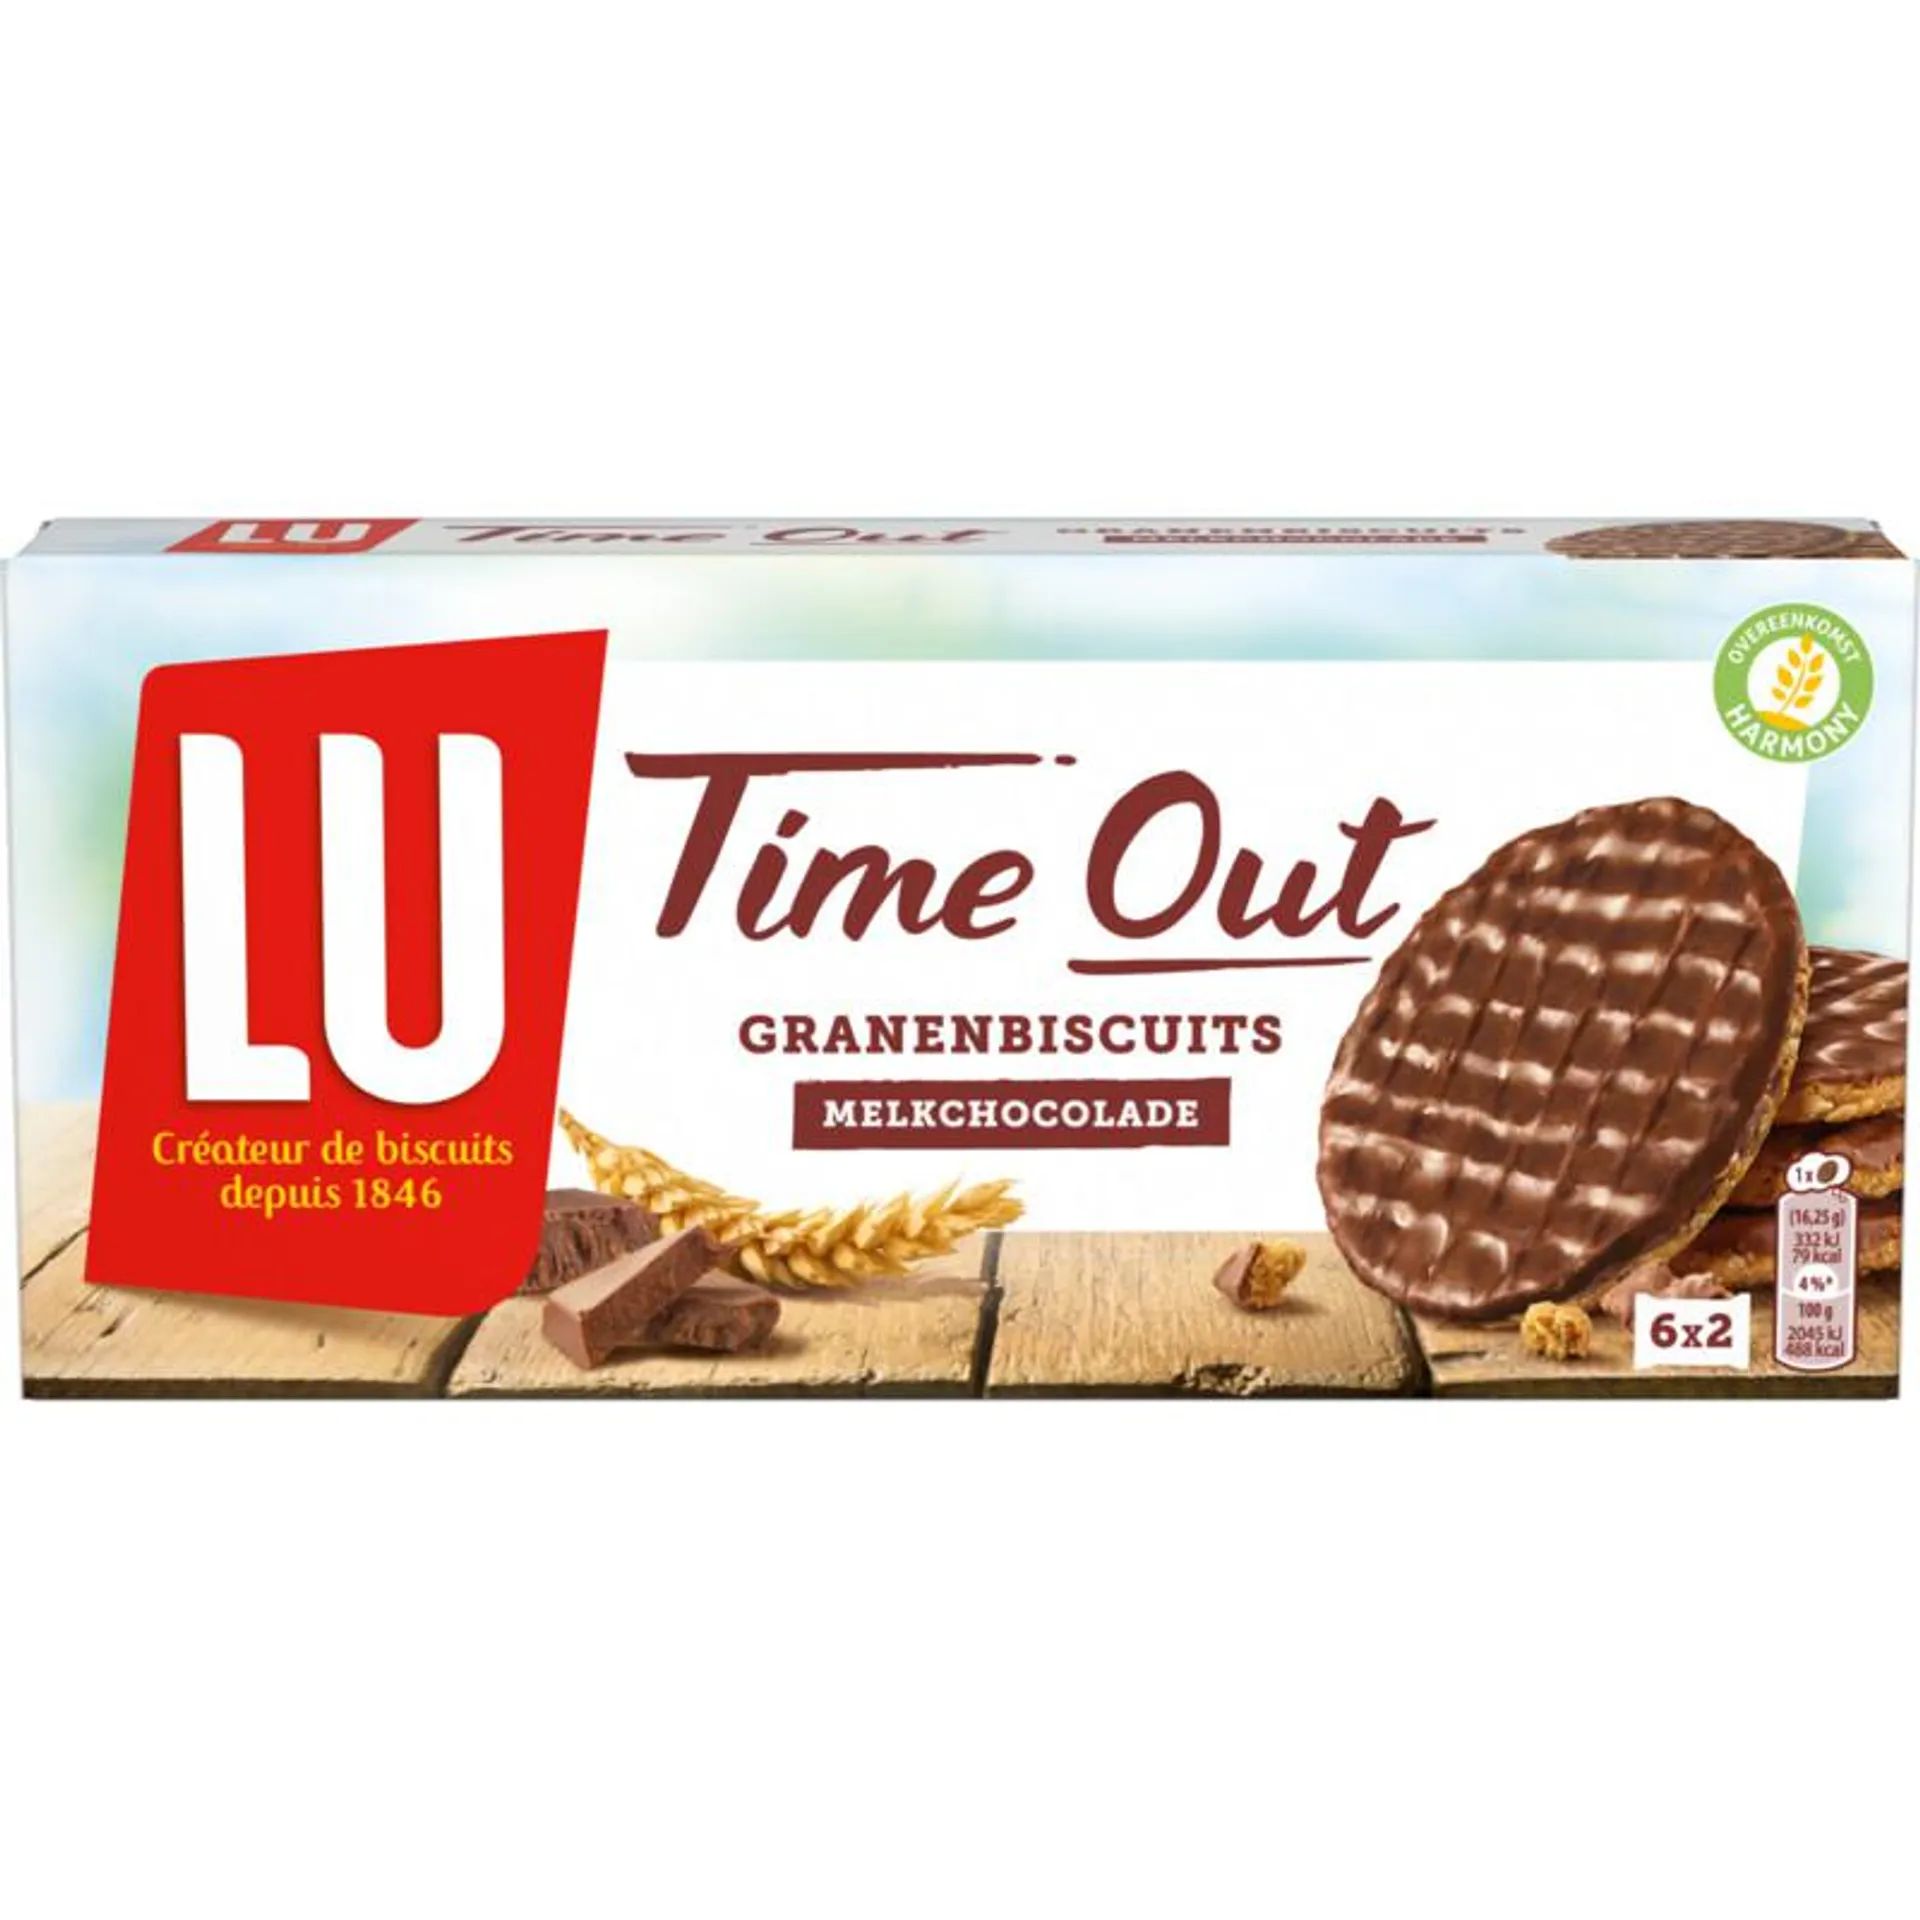 LU Time Out granenbiscuits melkchocolade